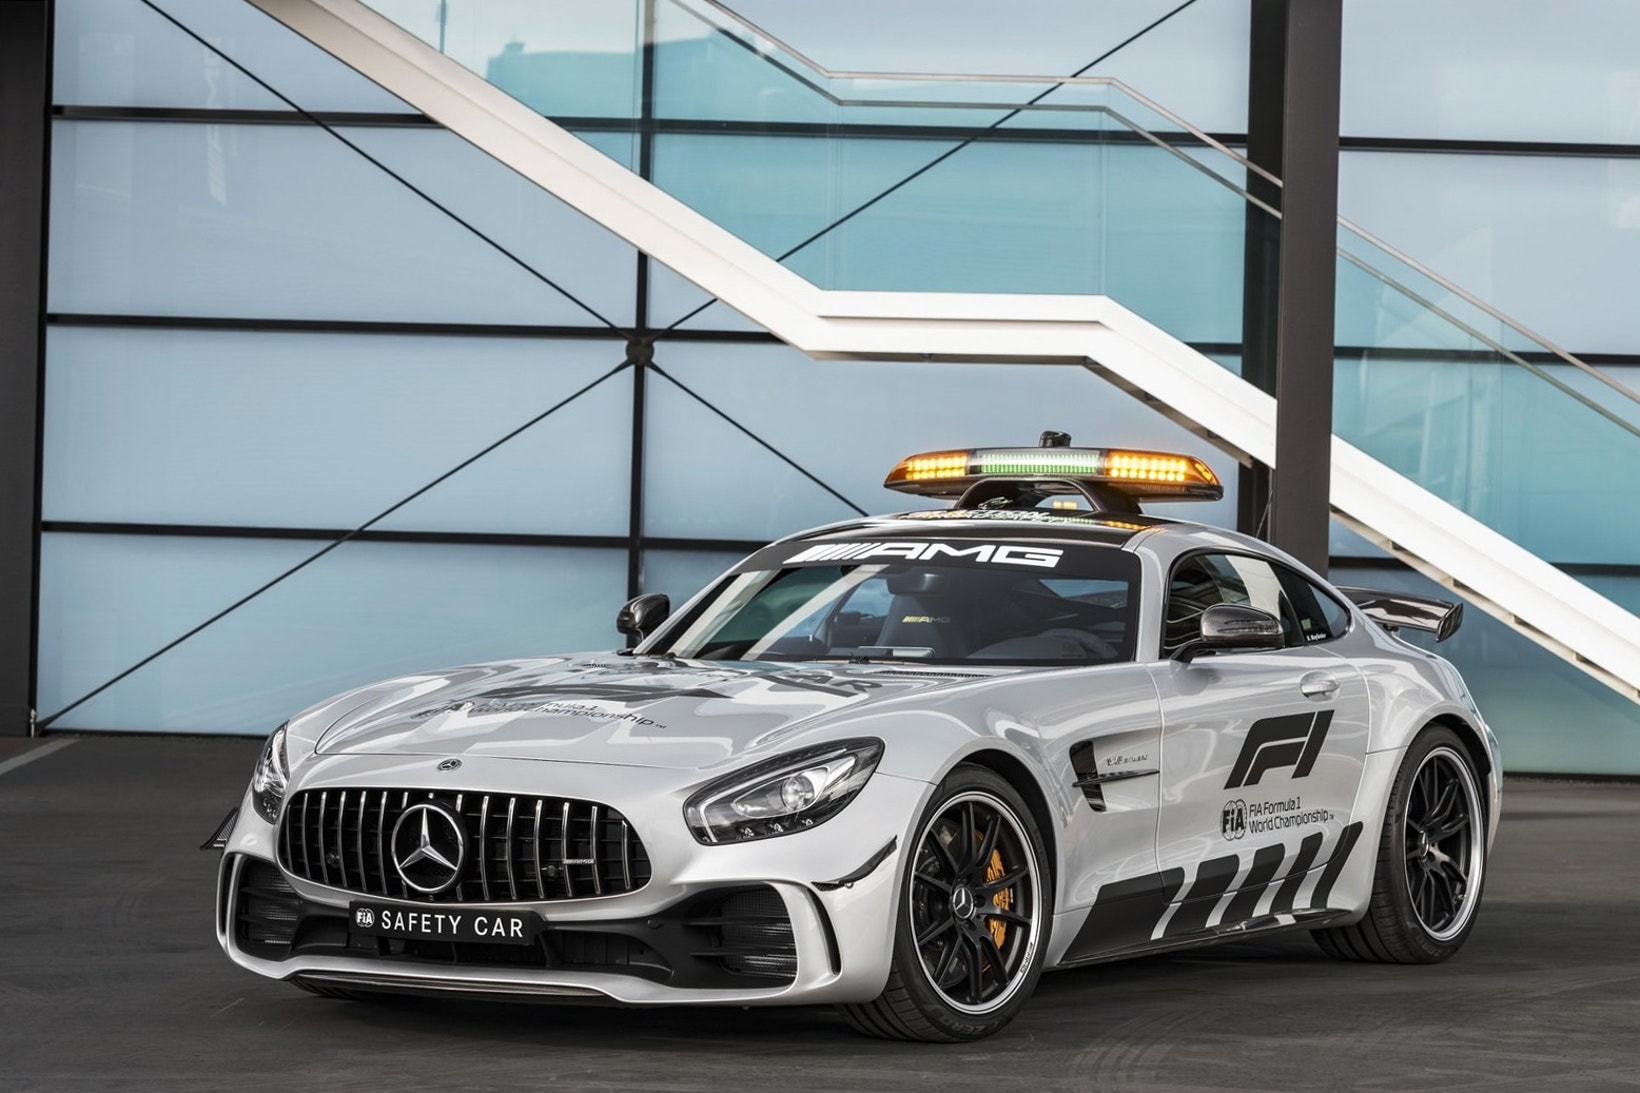 Mercedes-AMG 正式公佈「史上最強」F1 安全車官方圖片